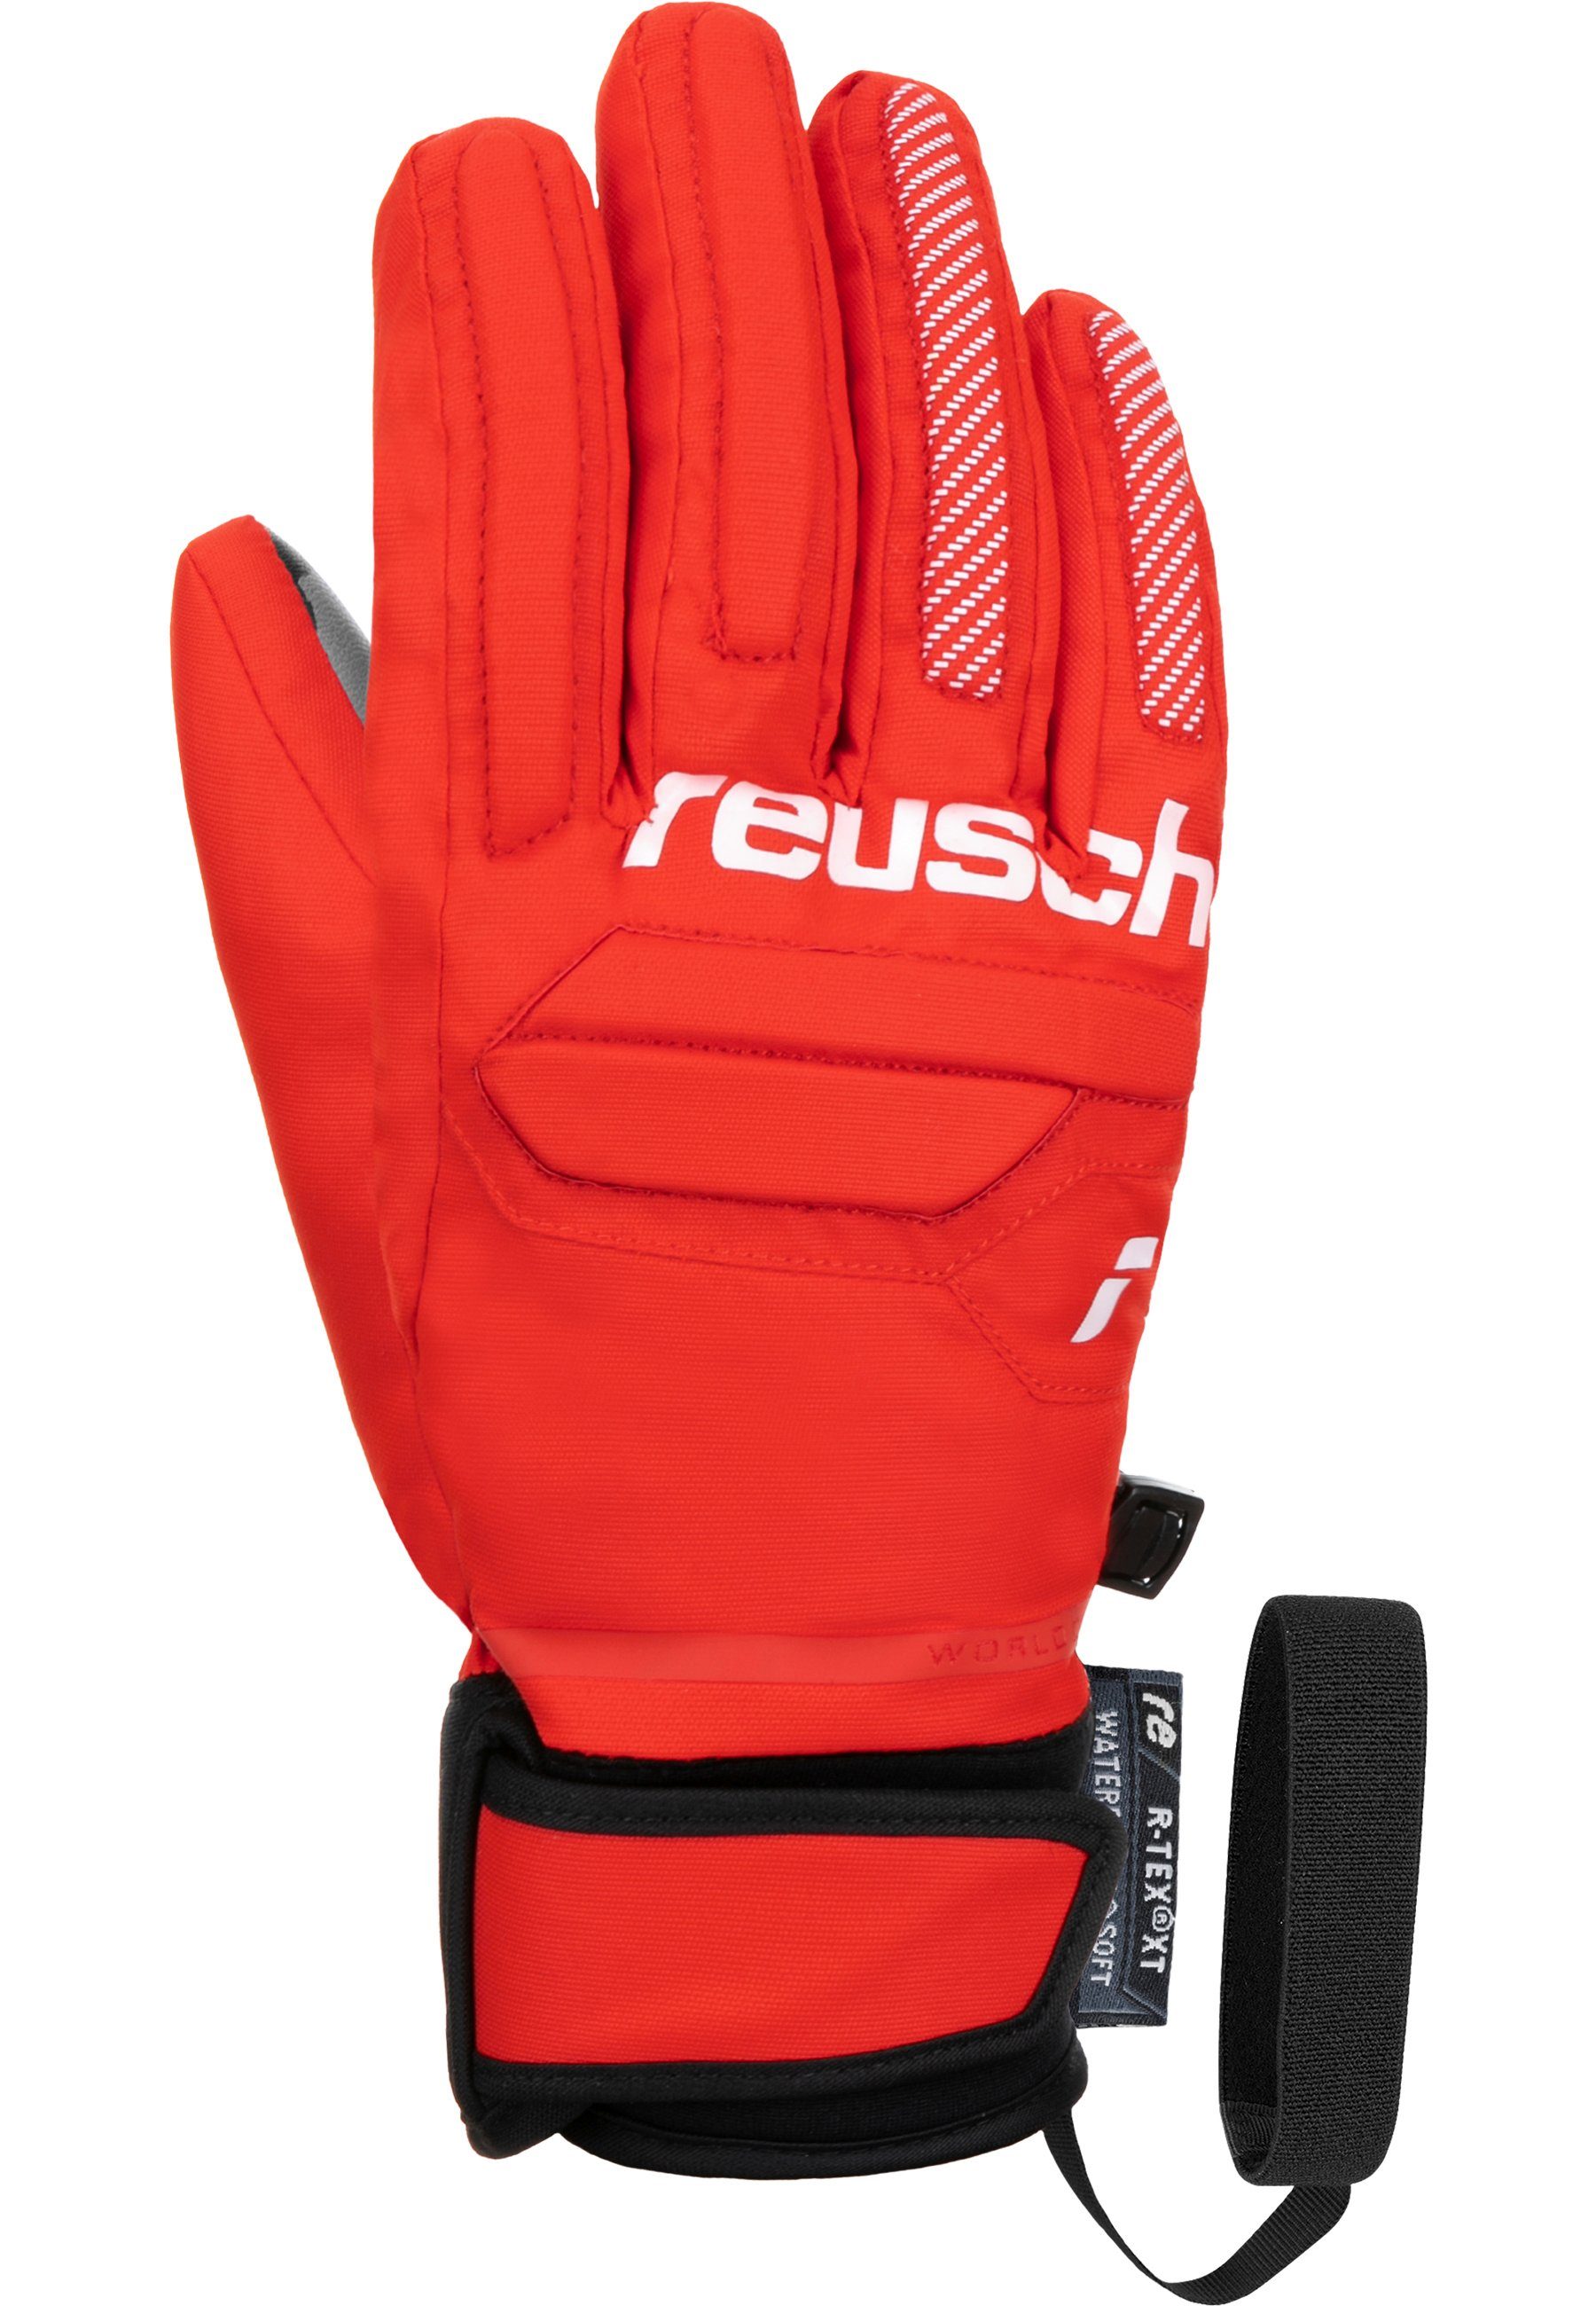 Reusch Skihandschuhe Warrior R-TEX XT Junior mit wasserdichter  Funktionsmembran, Hohe Atmungsaktivität und herausragende Luftzirkulation